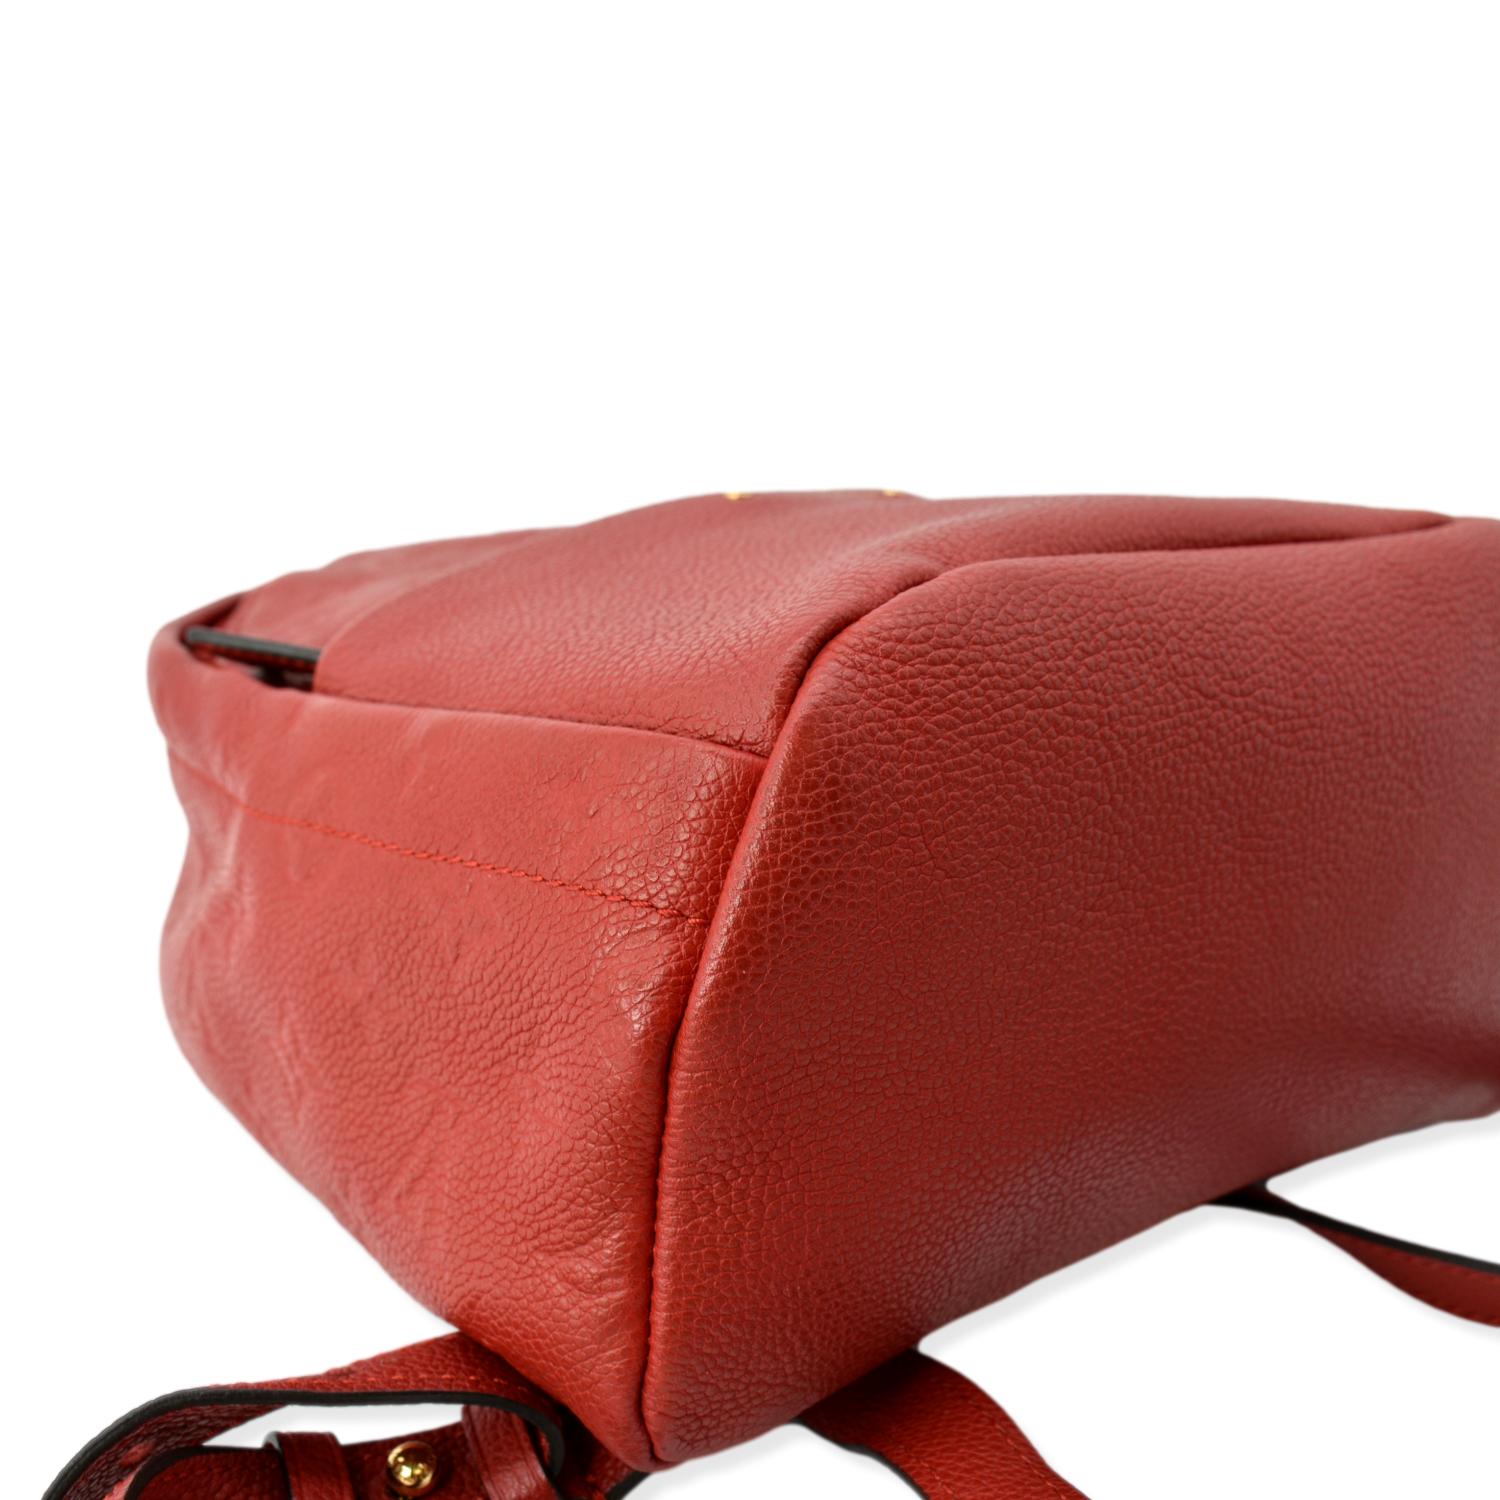 Louis Vuitton Monogram Empreinte Sorbonne Backpack - Red Backpacks